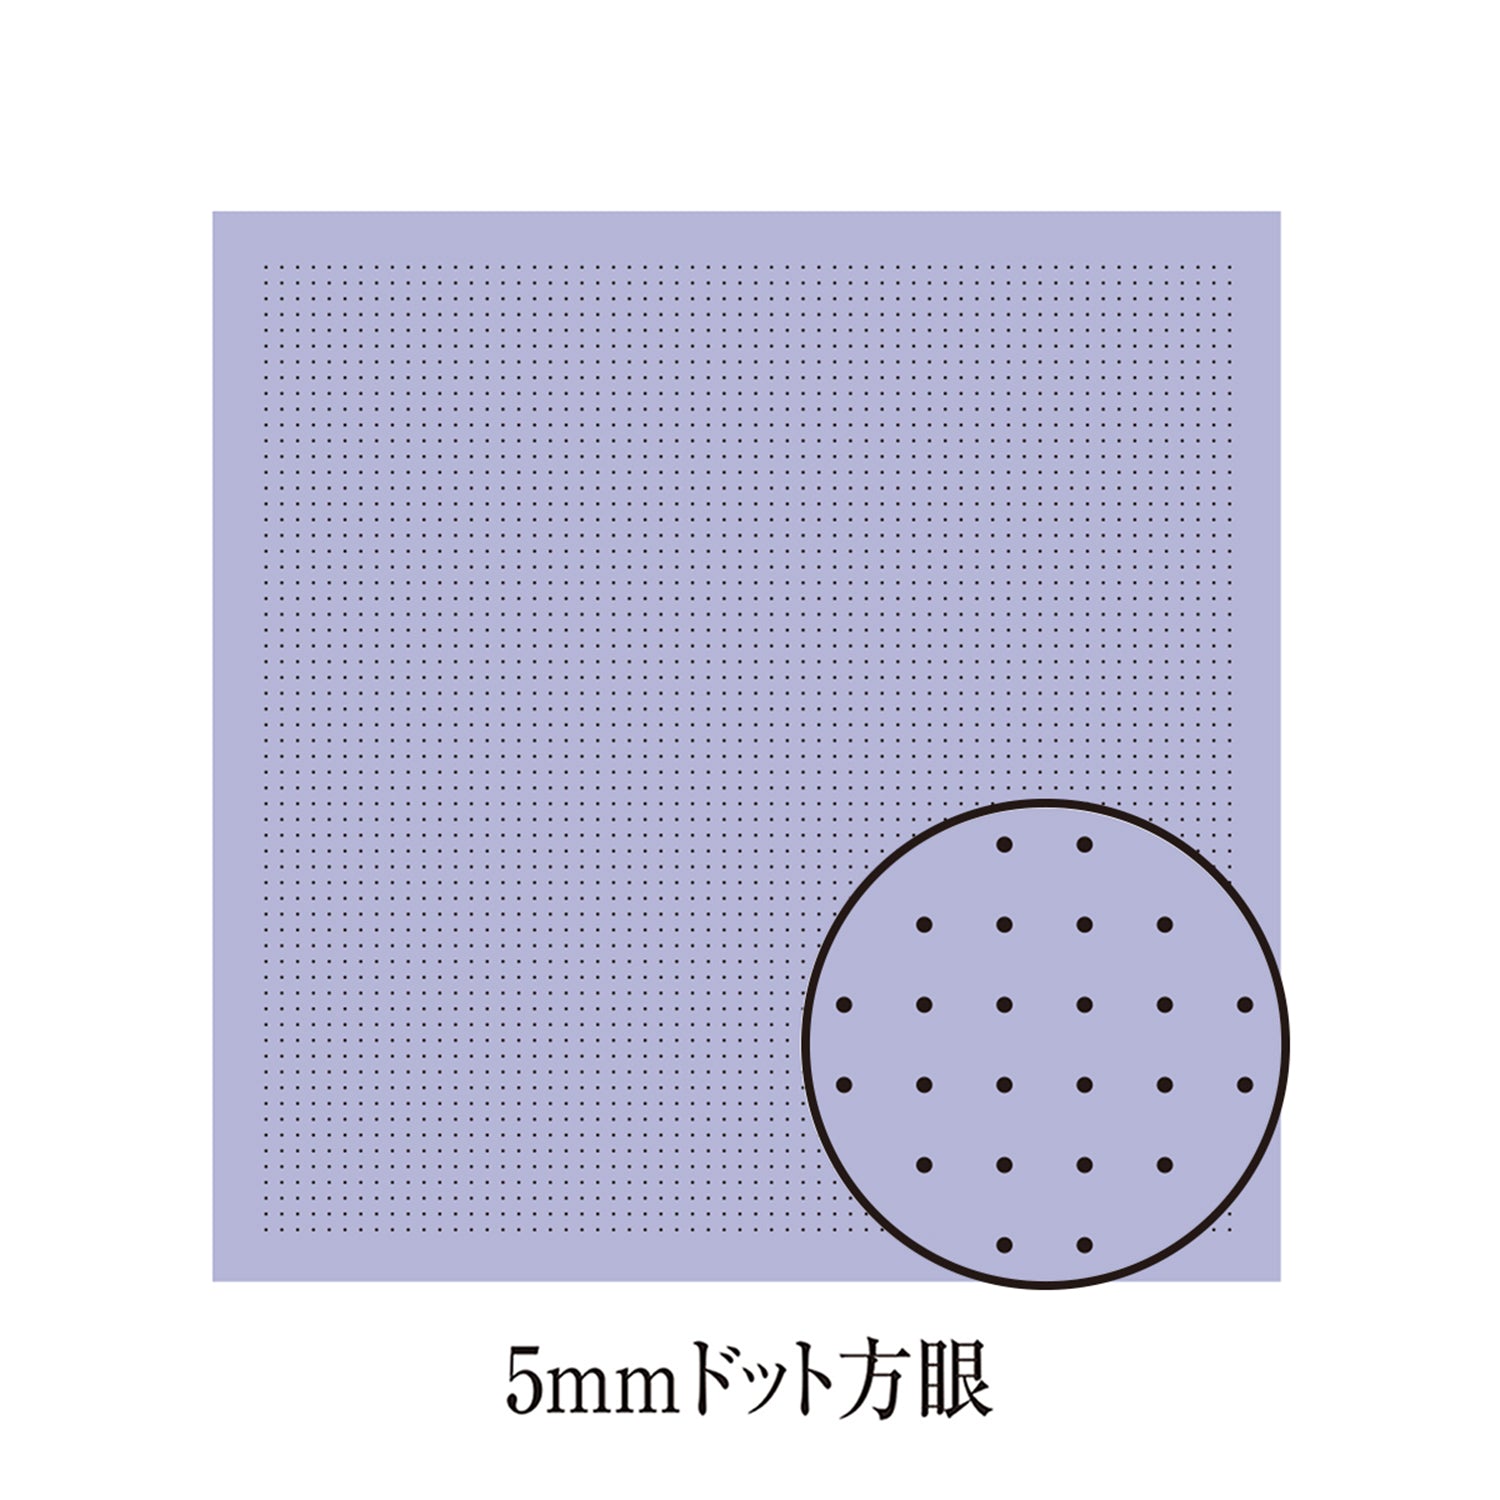 Sashiko Fabric - Pre-printed Sashiko Fabric - with DOTTED GRID for Sti